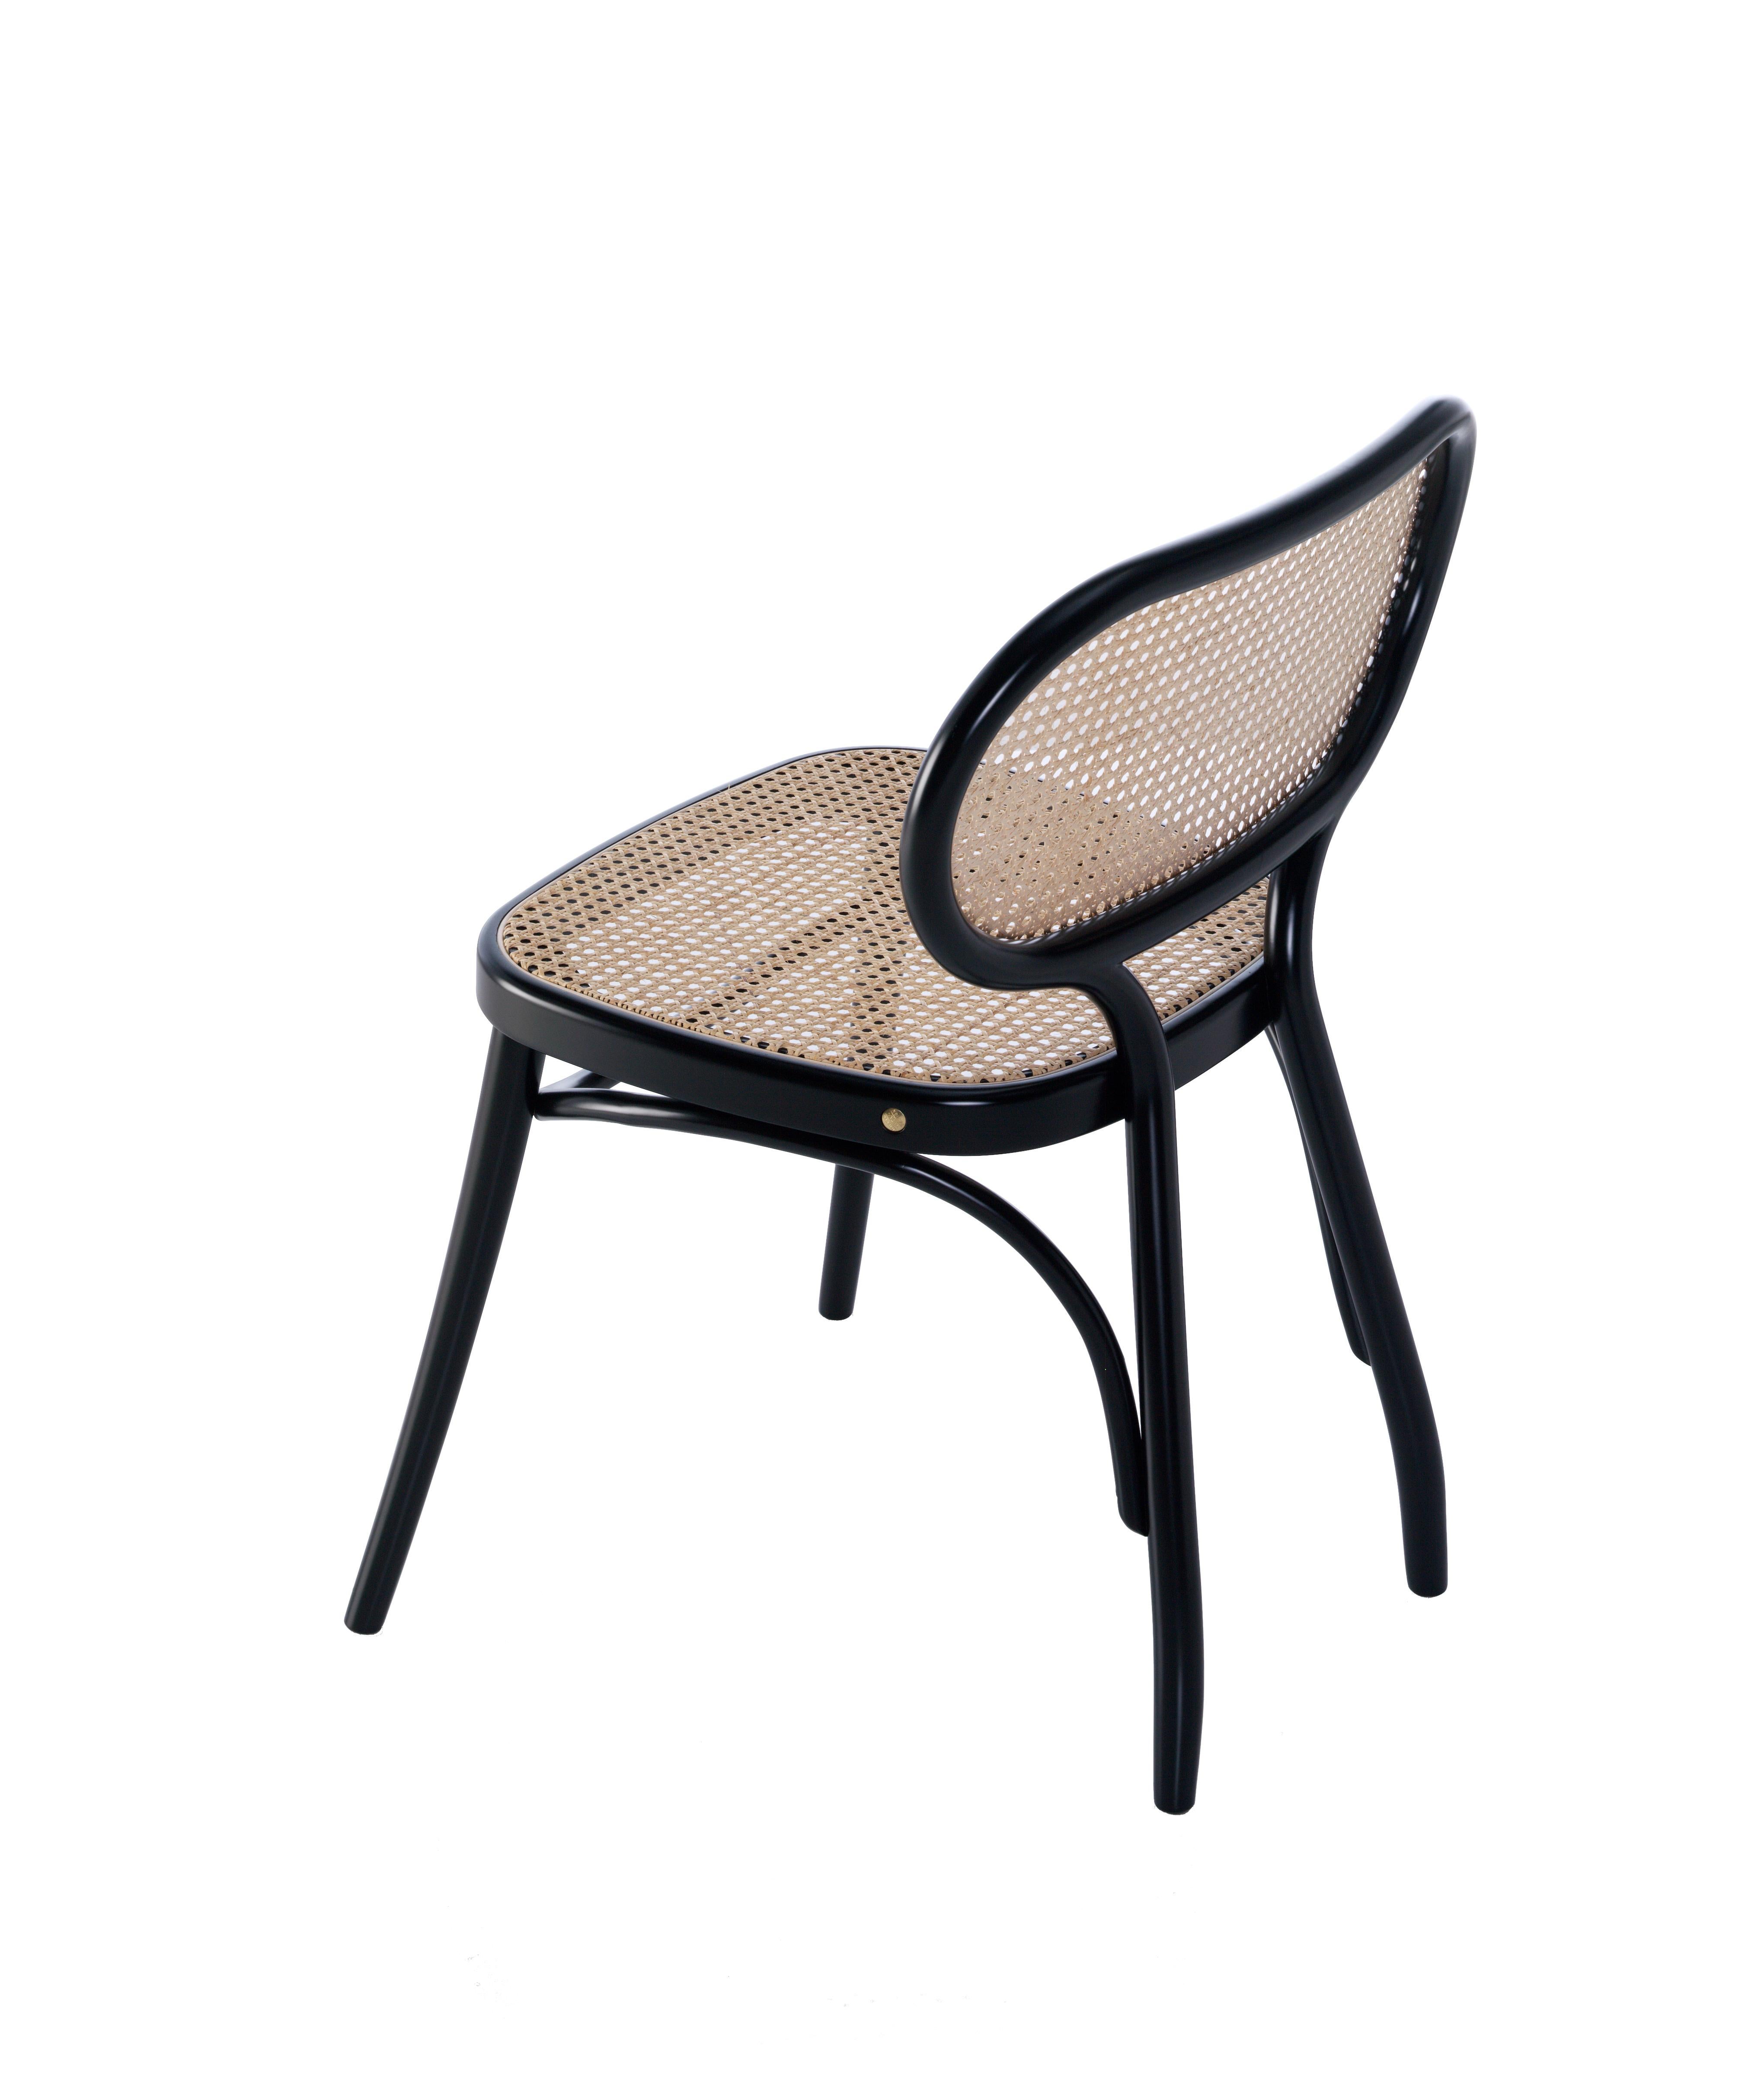 Modern Gebrüder Thonet Vienna GmbH Bodystuhl Chair in Black with Woven Cane Seat For Sale